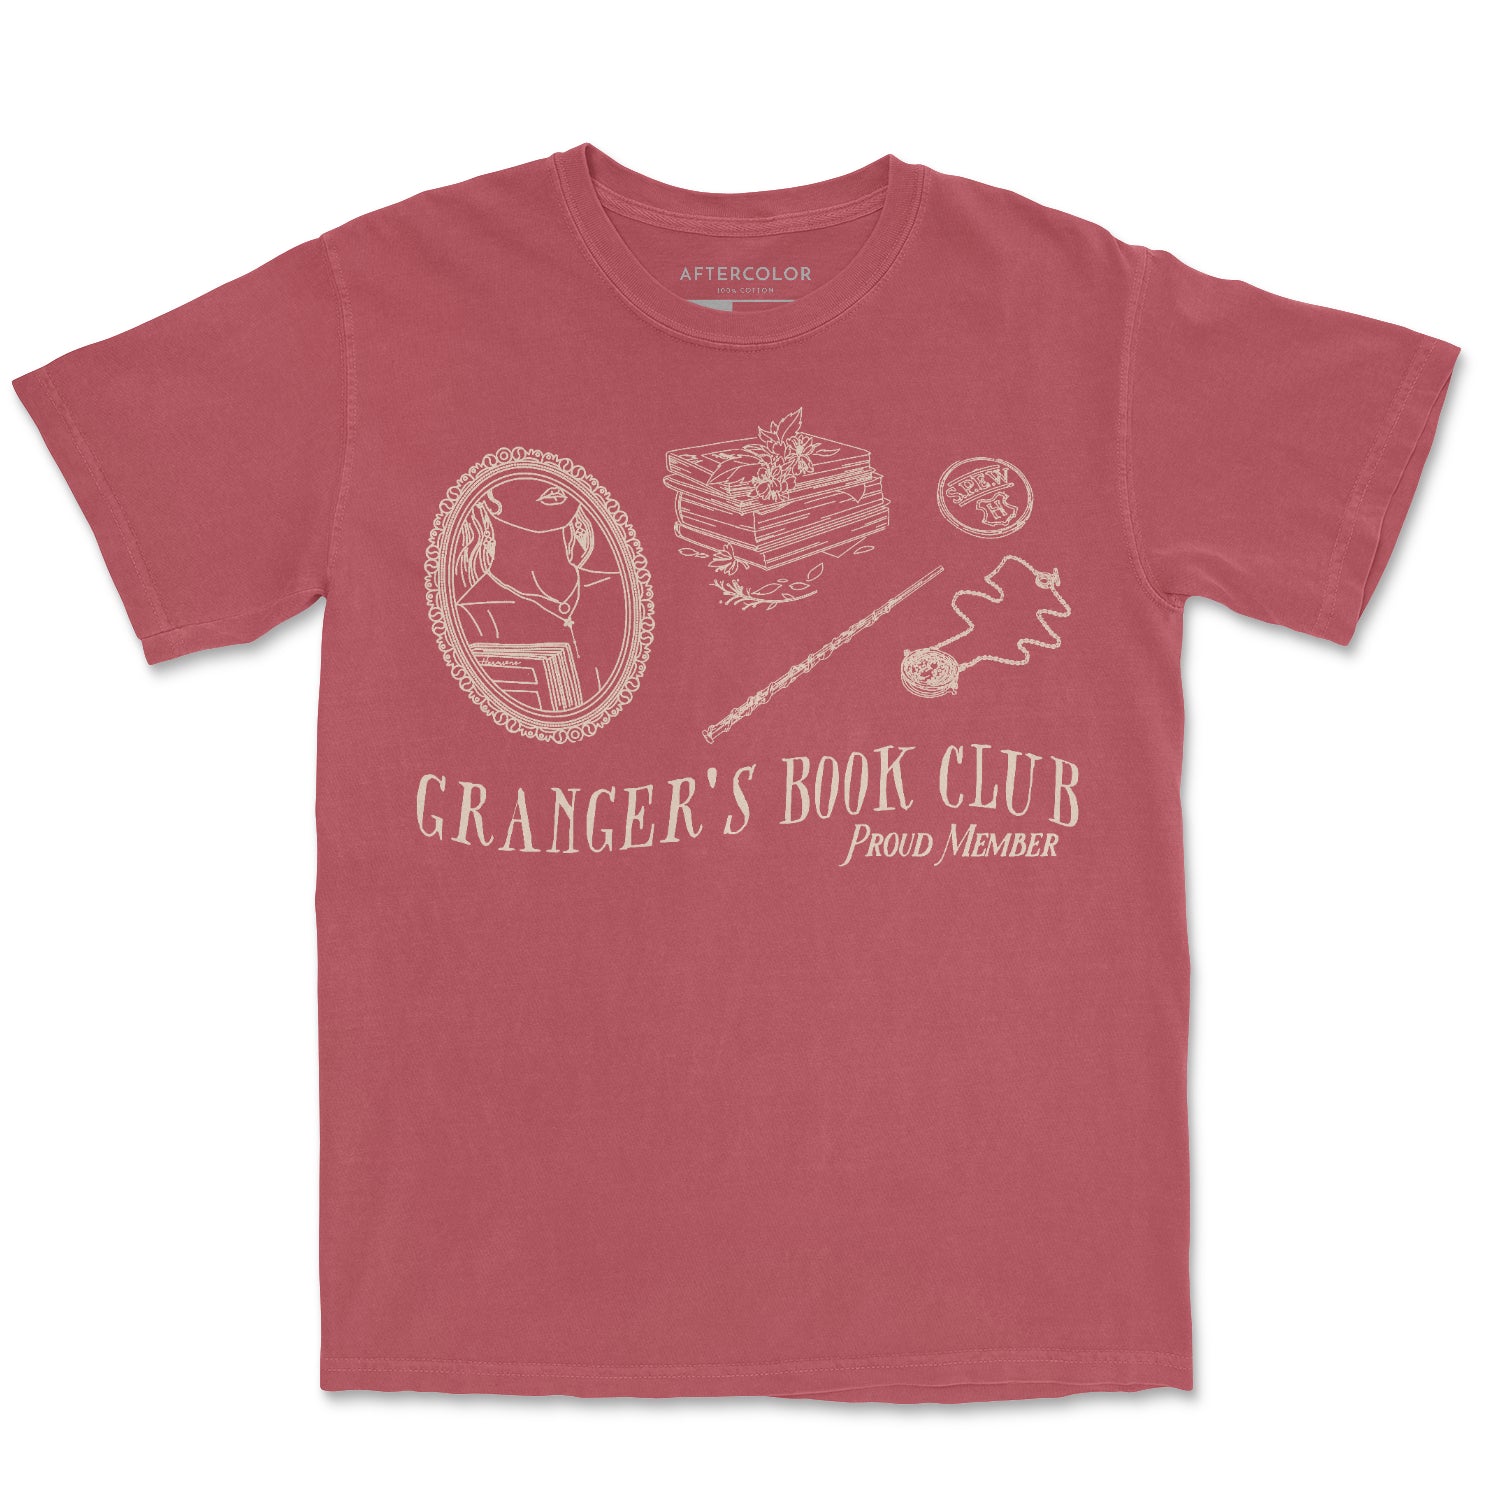 Granger's Book Club Garment Dyed Tee